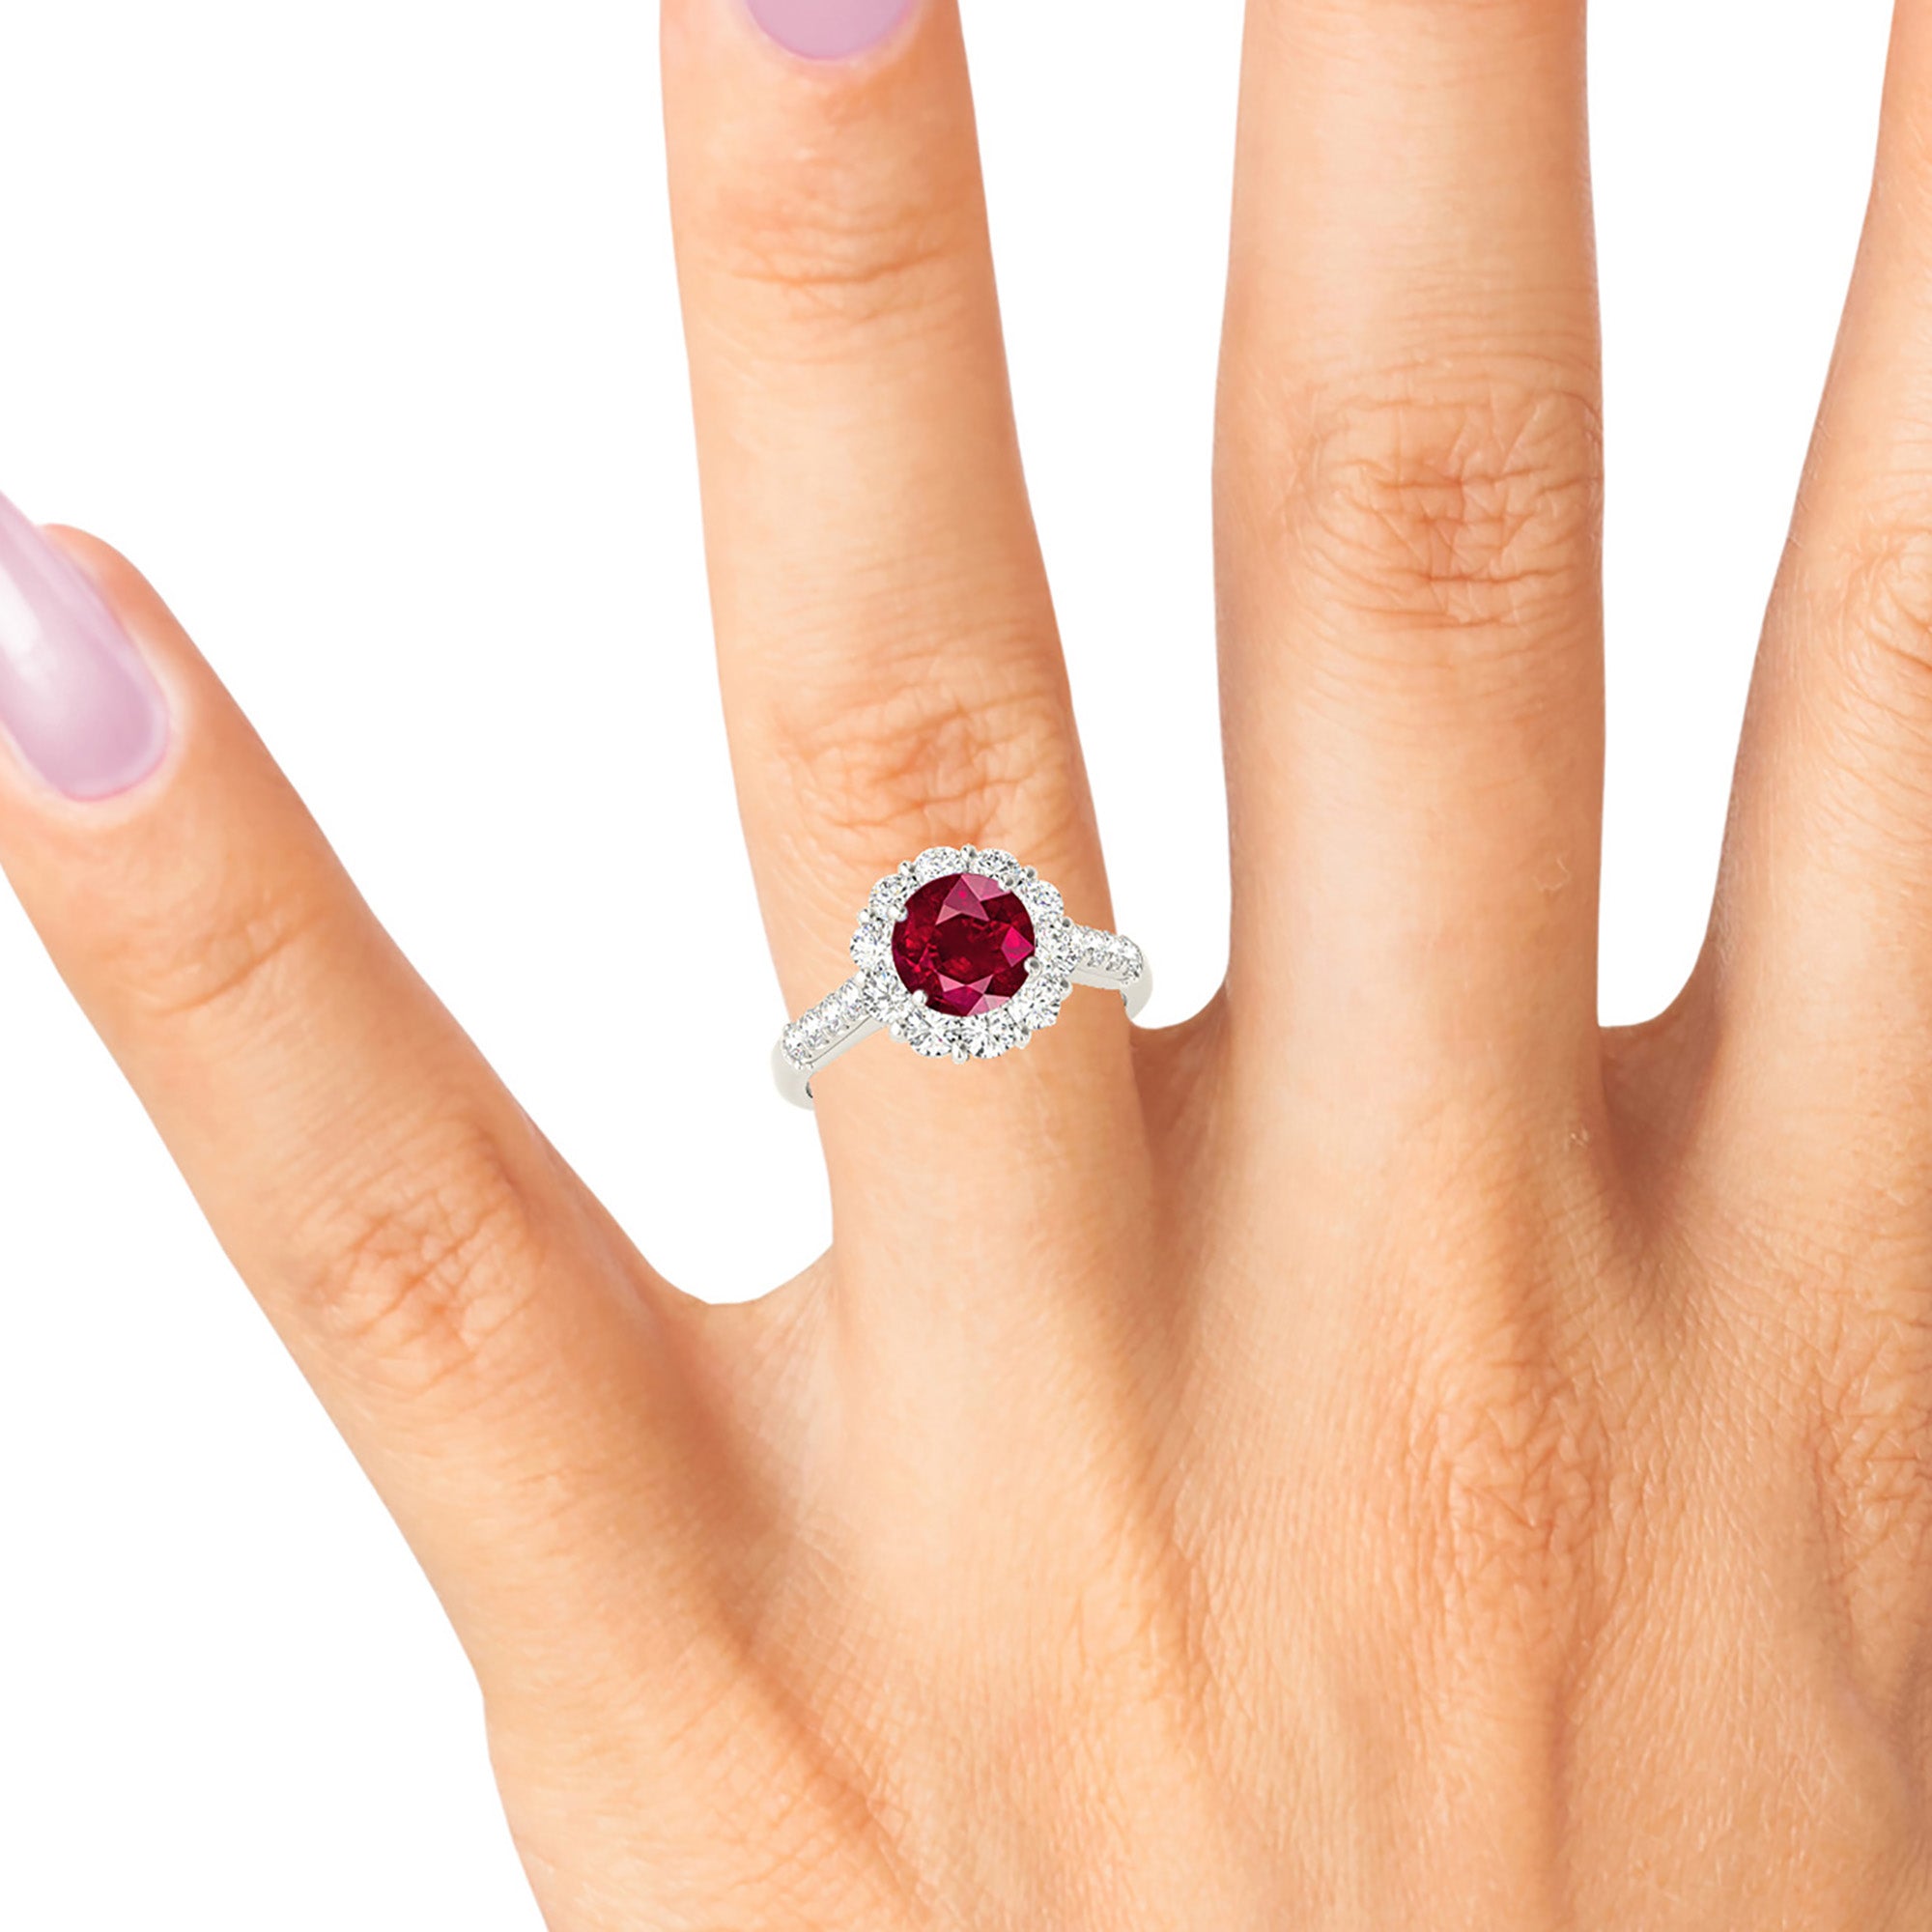 1.79 ct. Genuine Ruby Ring With 1.00 ctw. Diamond Halo And Delicate Diamond Band, Swirl Design Bridge-in 14K/18K White, Yellow, Rose Gold and Platinum - Christmas Jewelry Gift -VIRABYANI